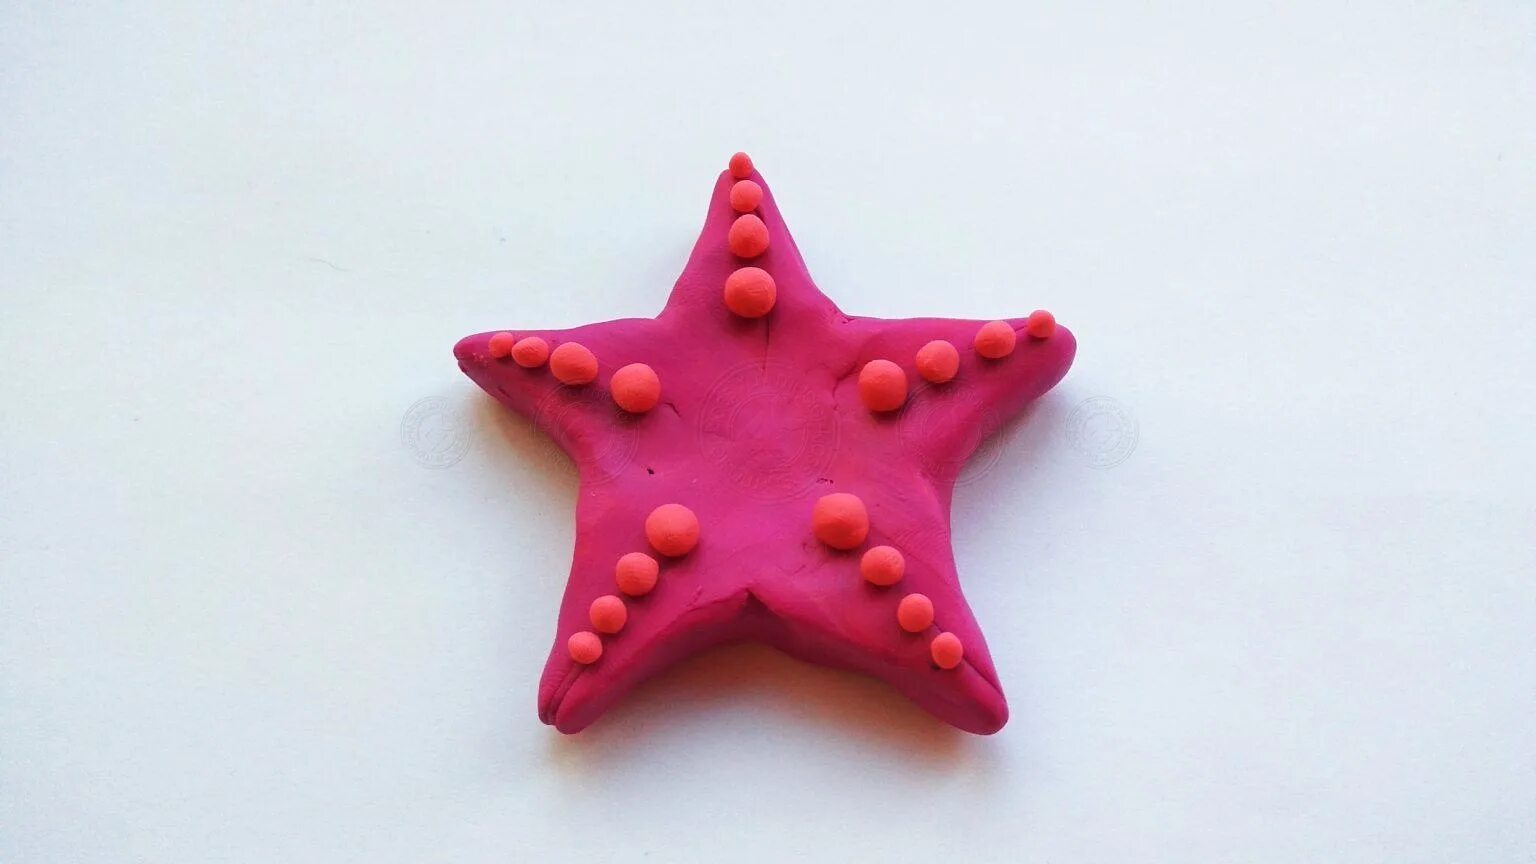 Лепка звезда средняя группа. Лепим морскую звезду из пластилина. Морская звезда лепка из пластилина. Морские звёзды ТЗ пластилина. Лепка морские звезды и кораллы.